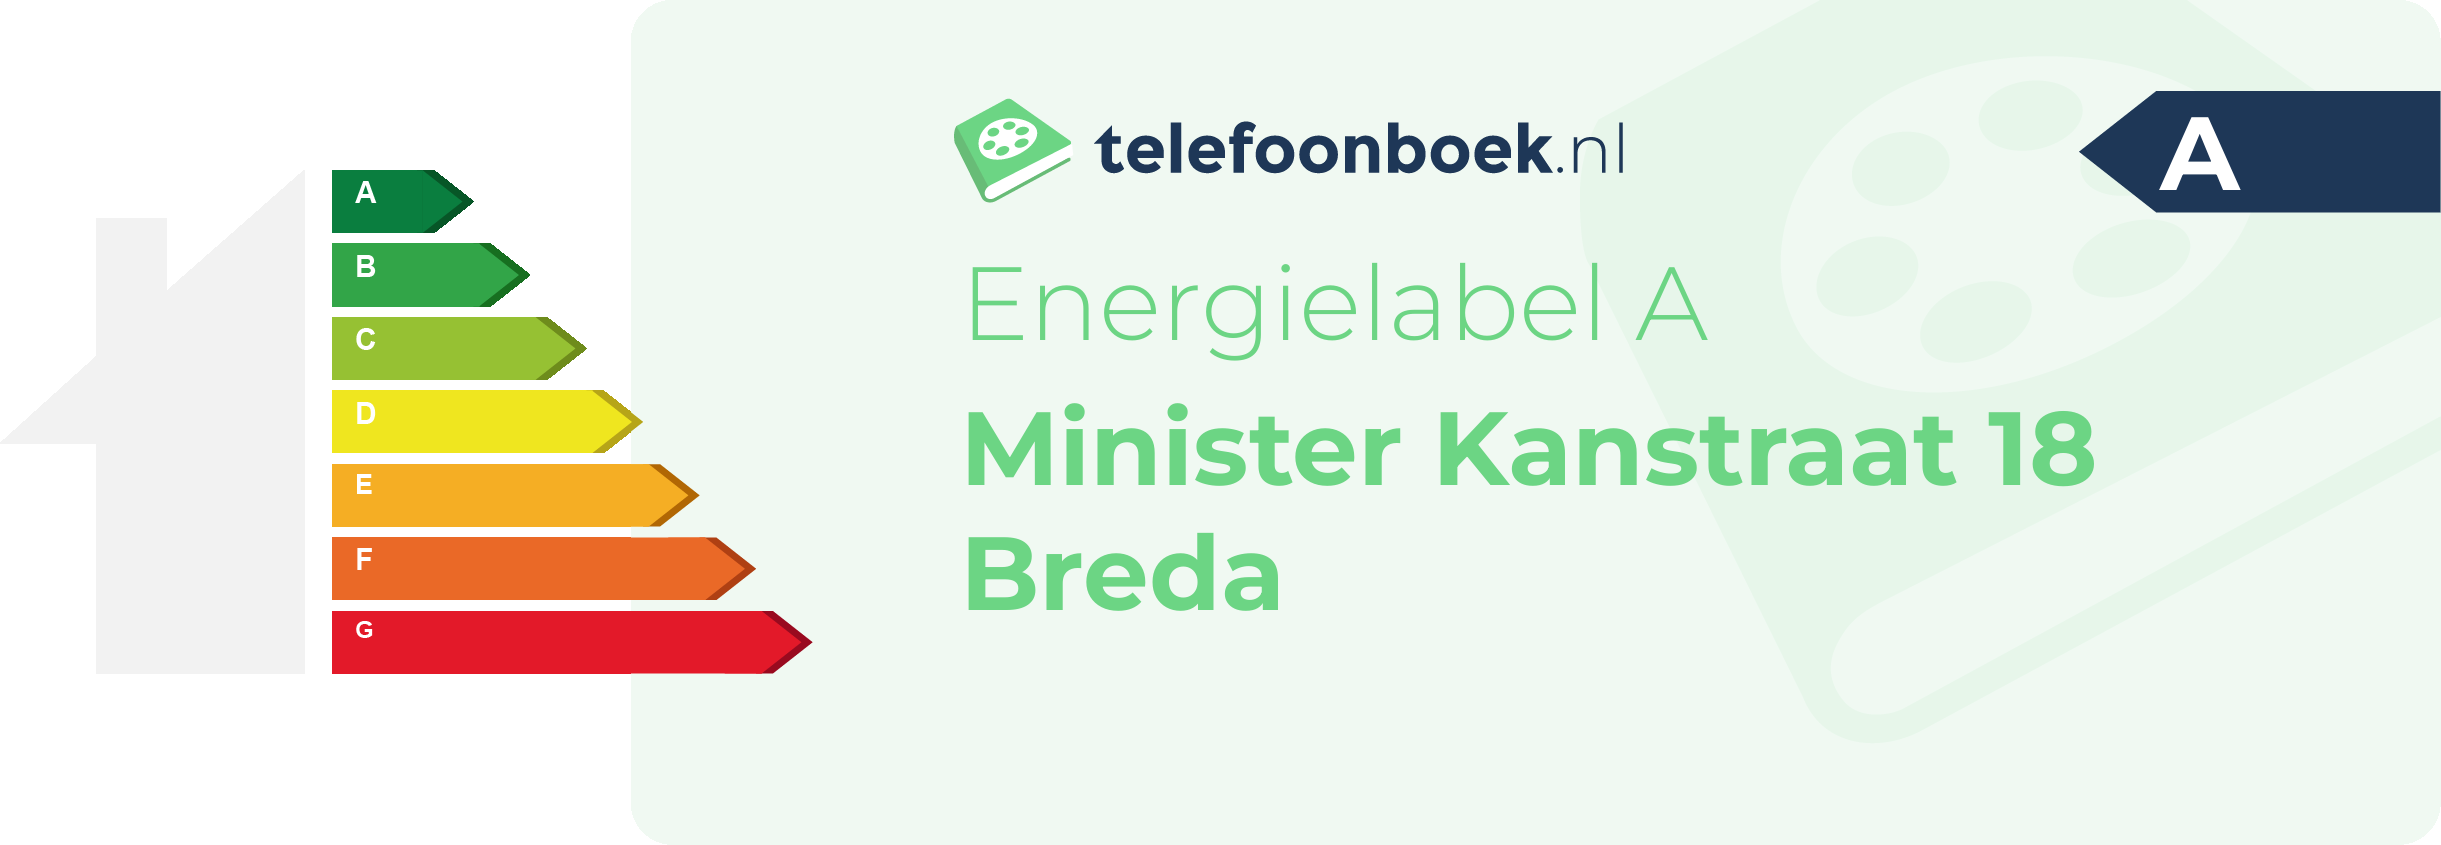 Energielabel Minister Kanstraat 18 Breda